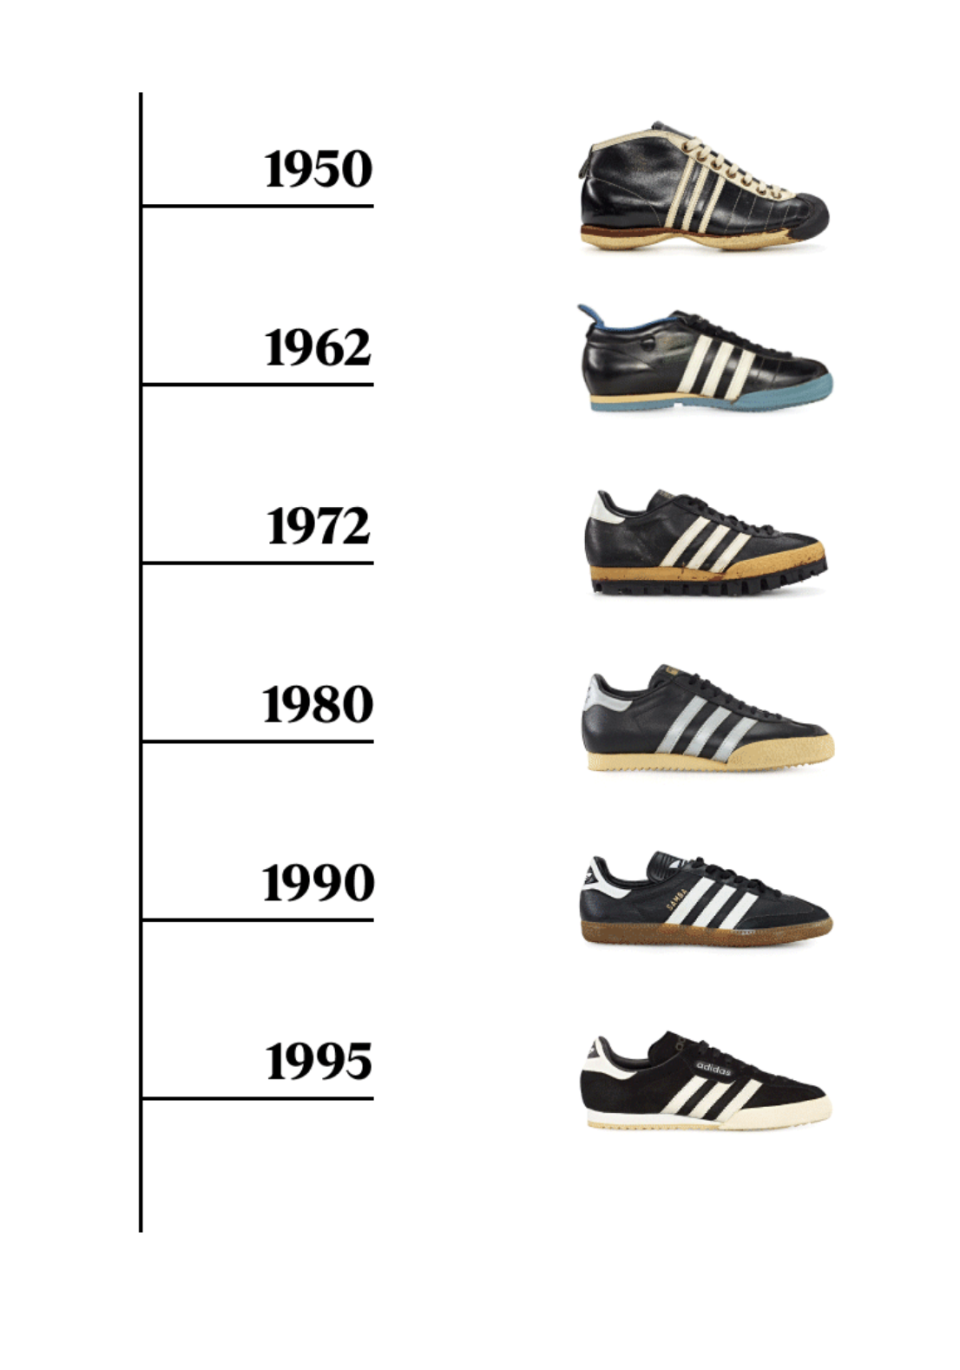 Adidas Samba History & Timeline